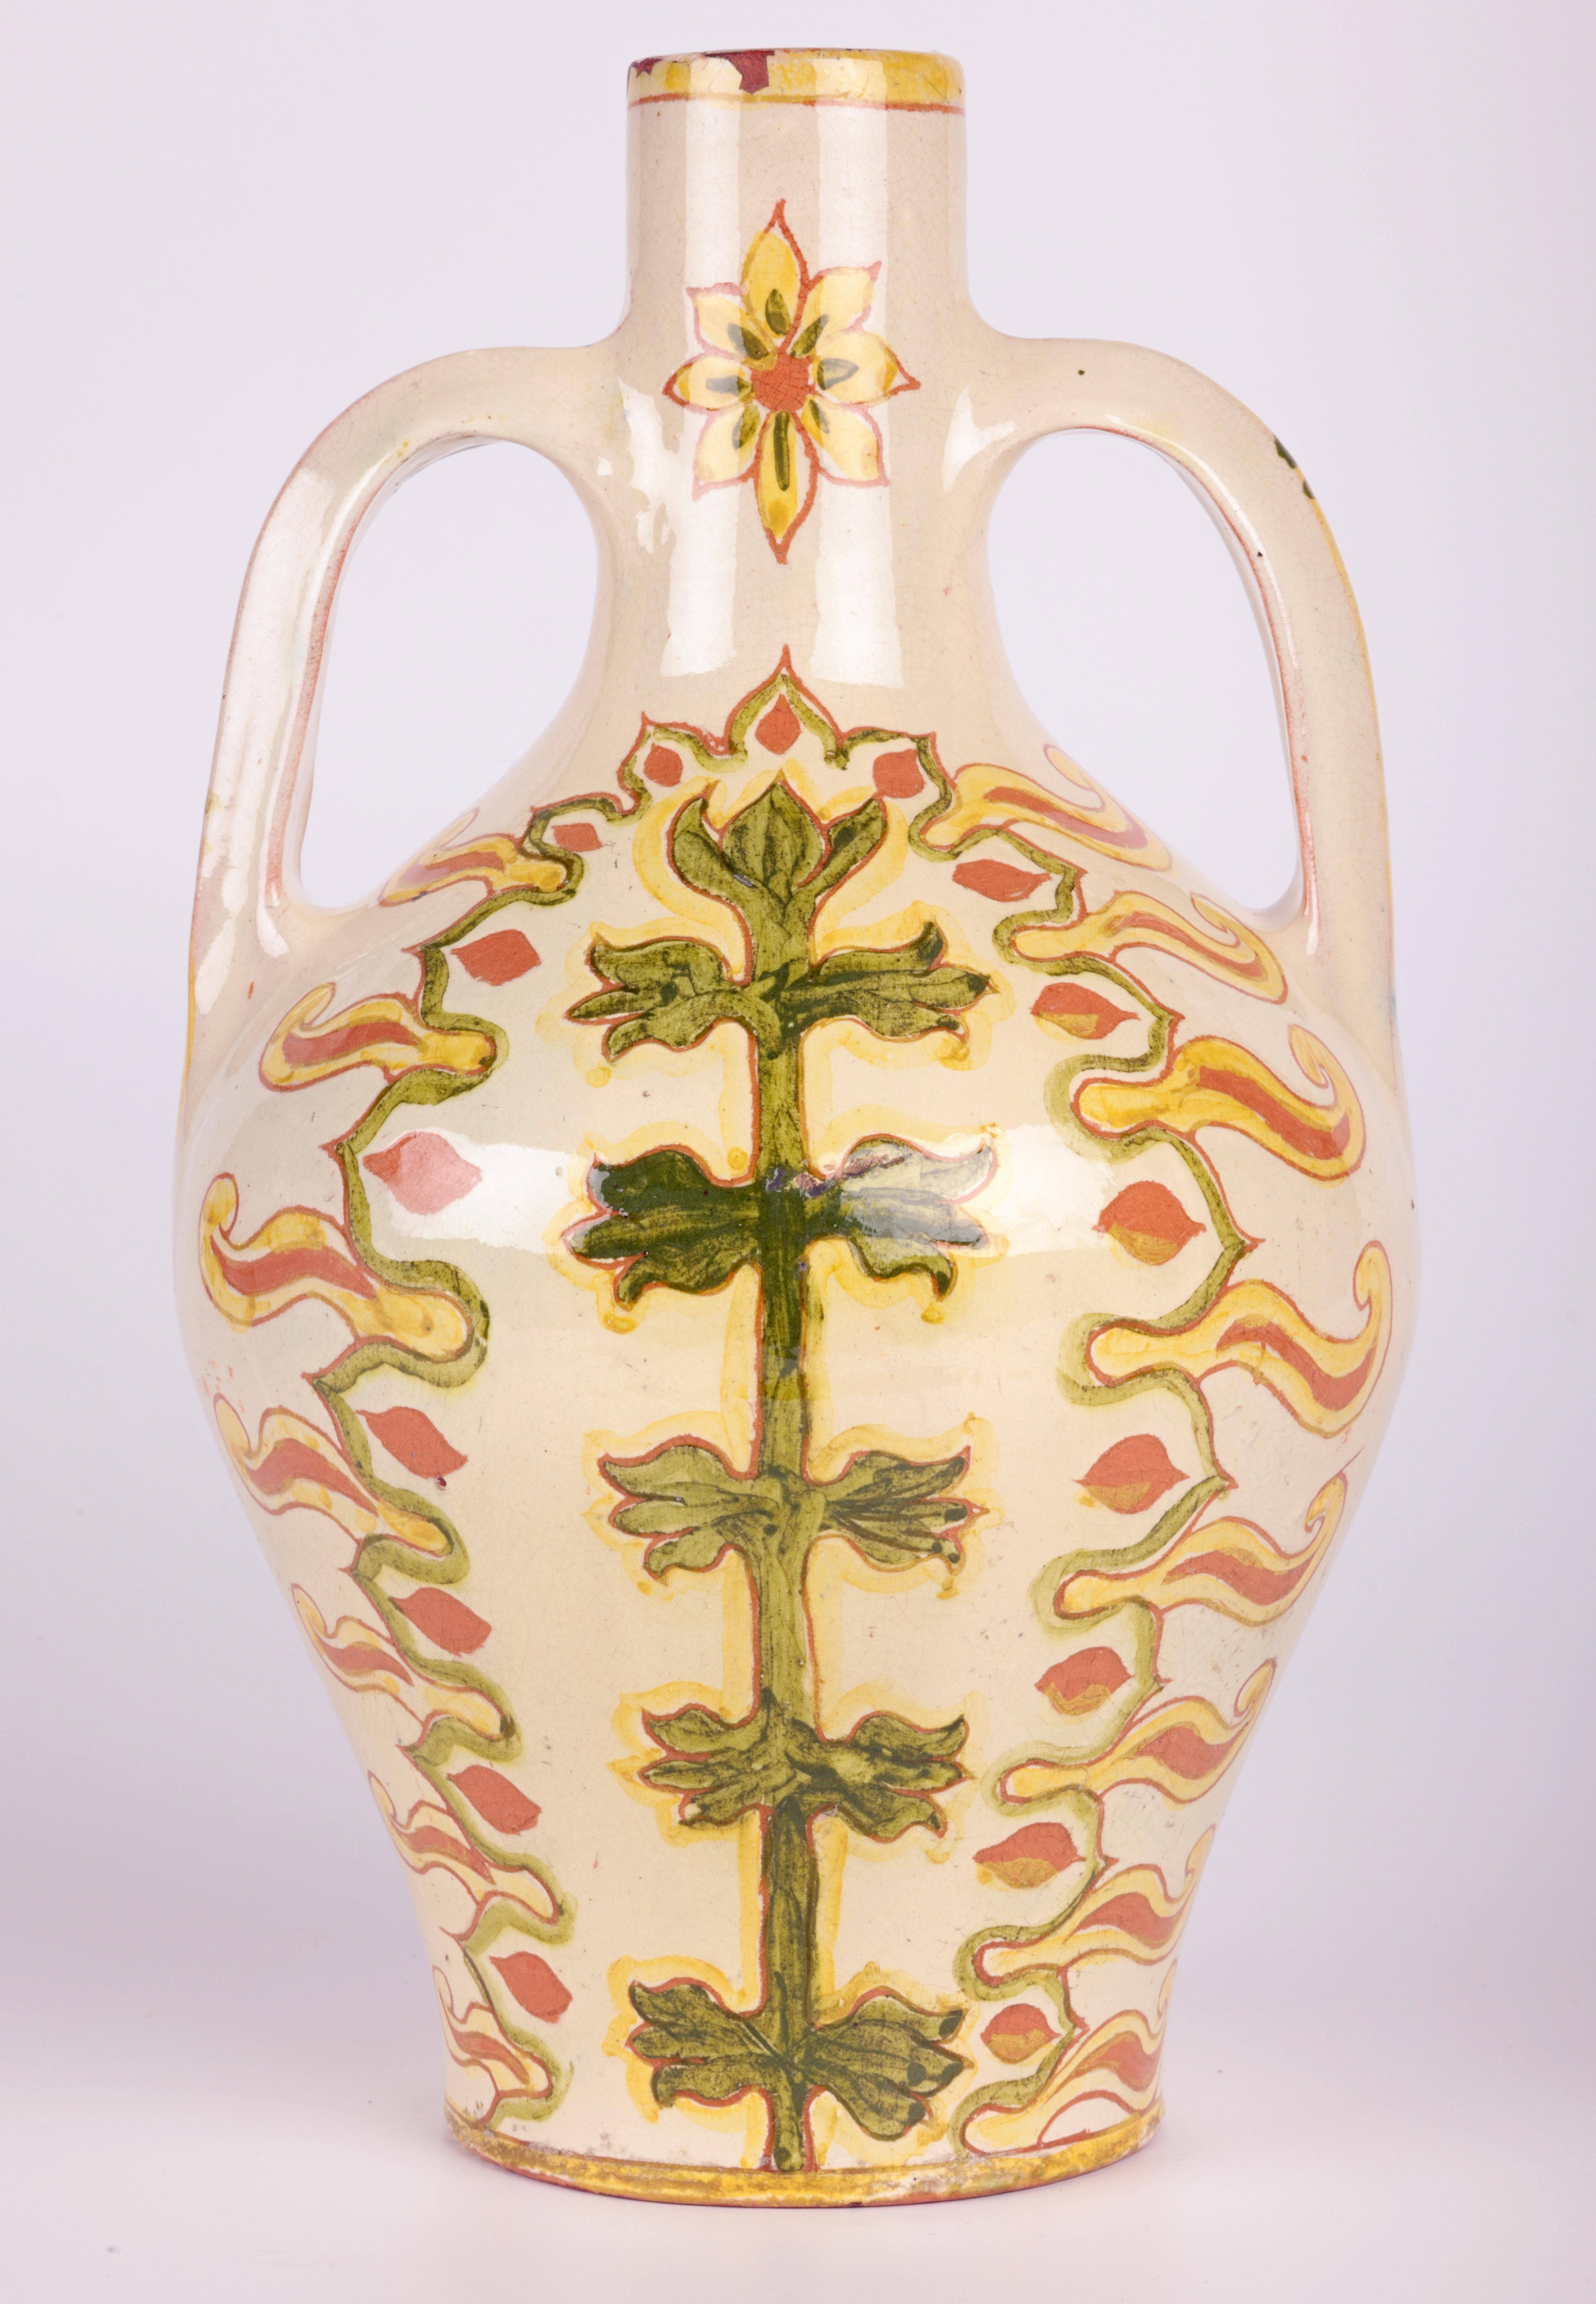 Lizzie Wilkins Della Robbia Birkenhead Arts & Crafts Vase For Sale 10